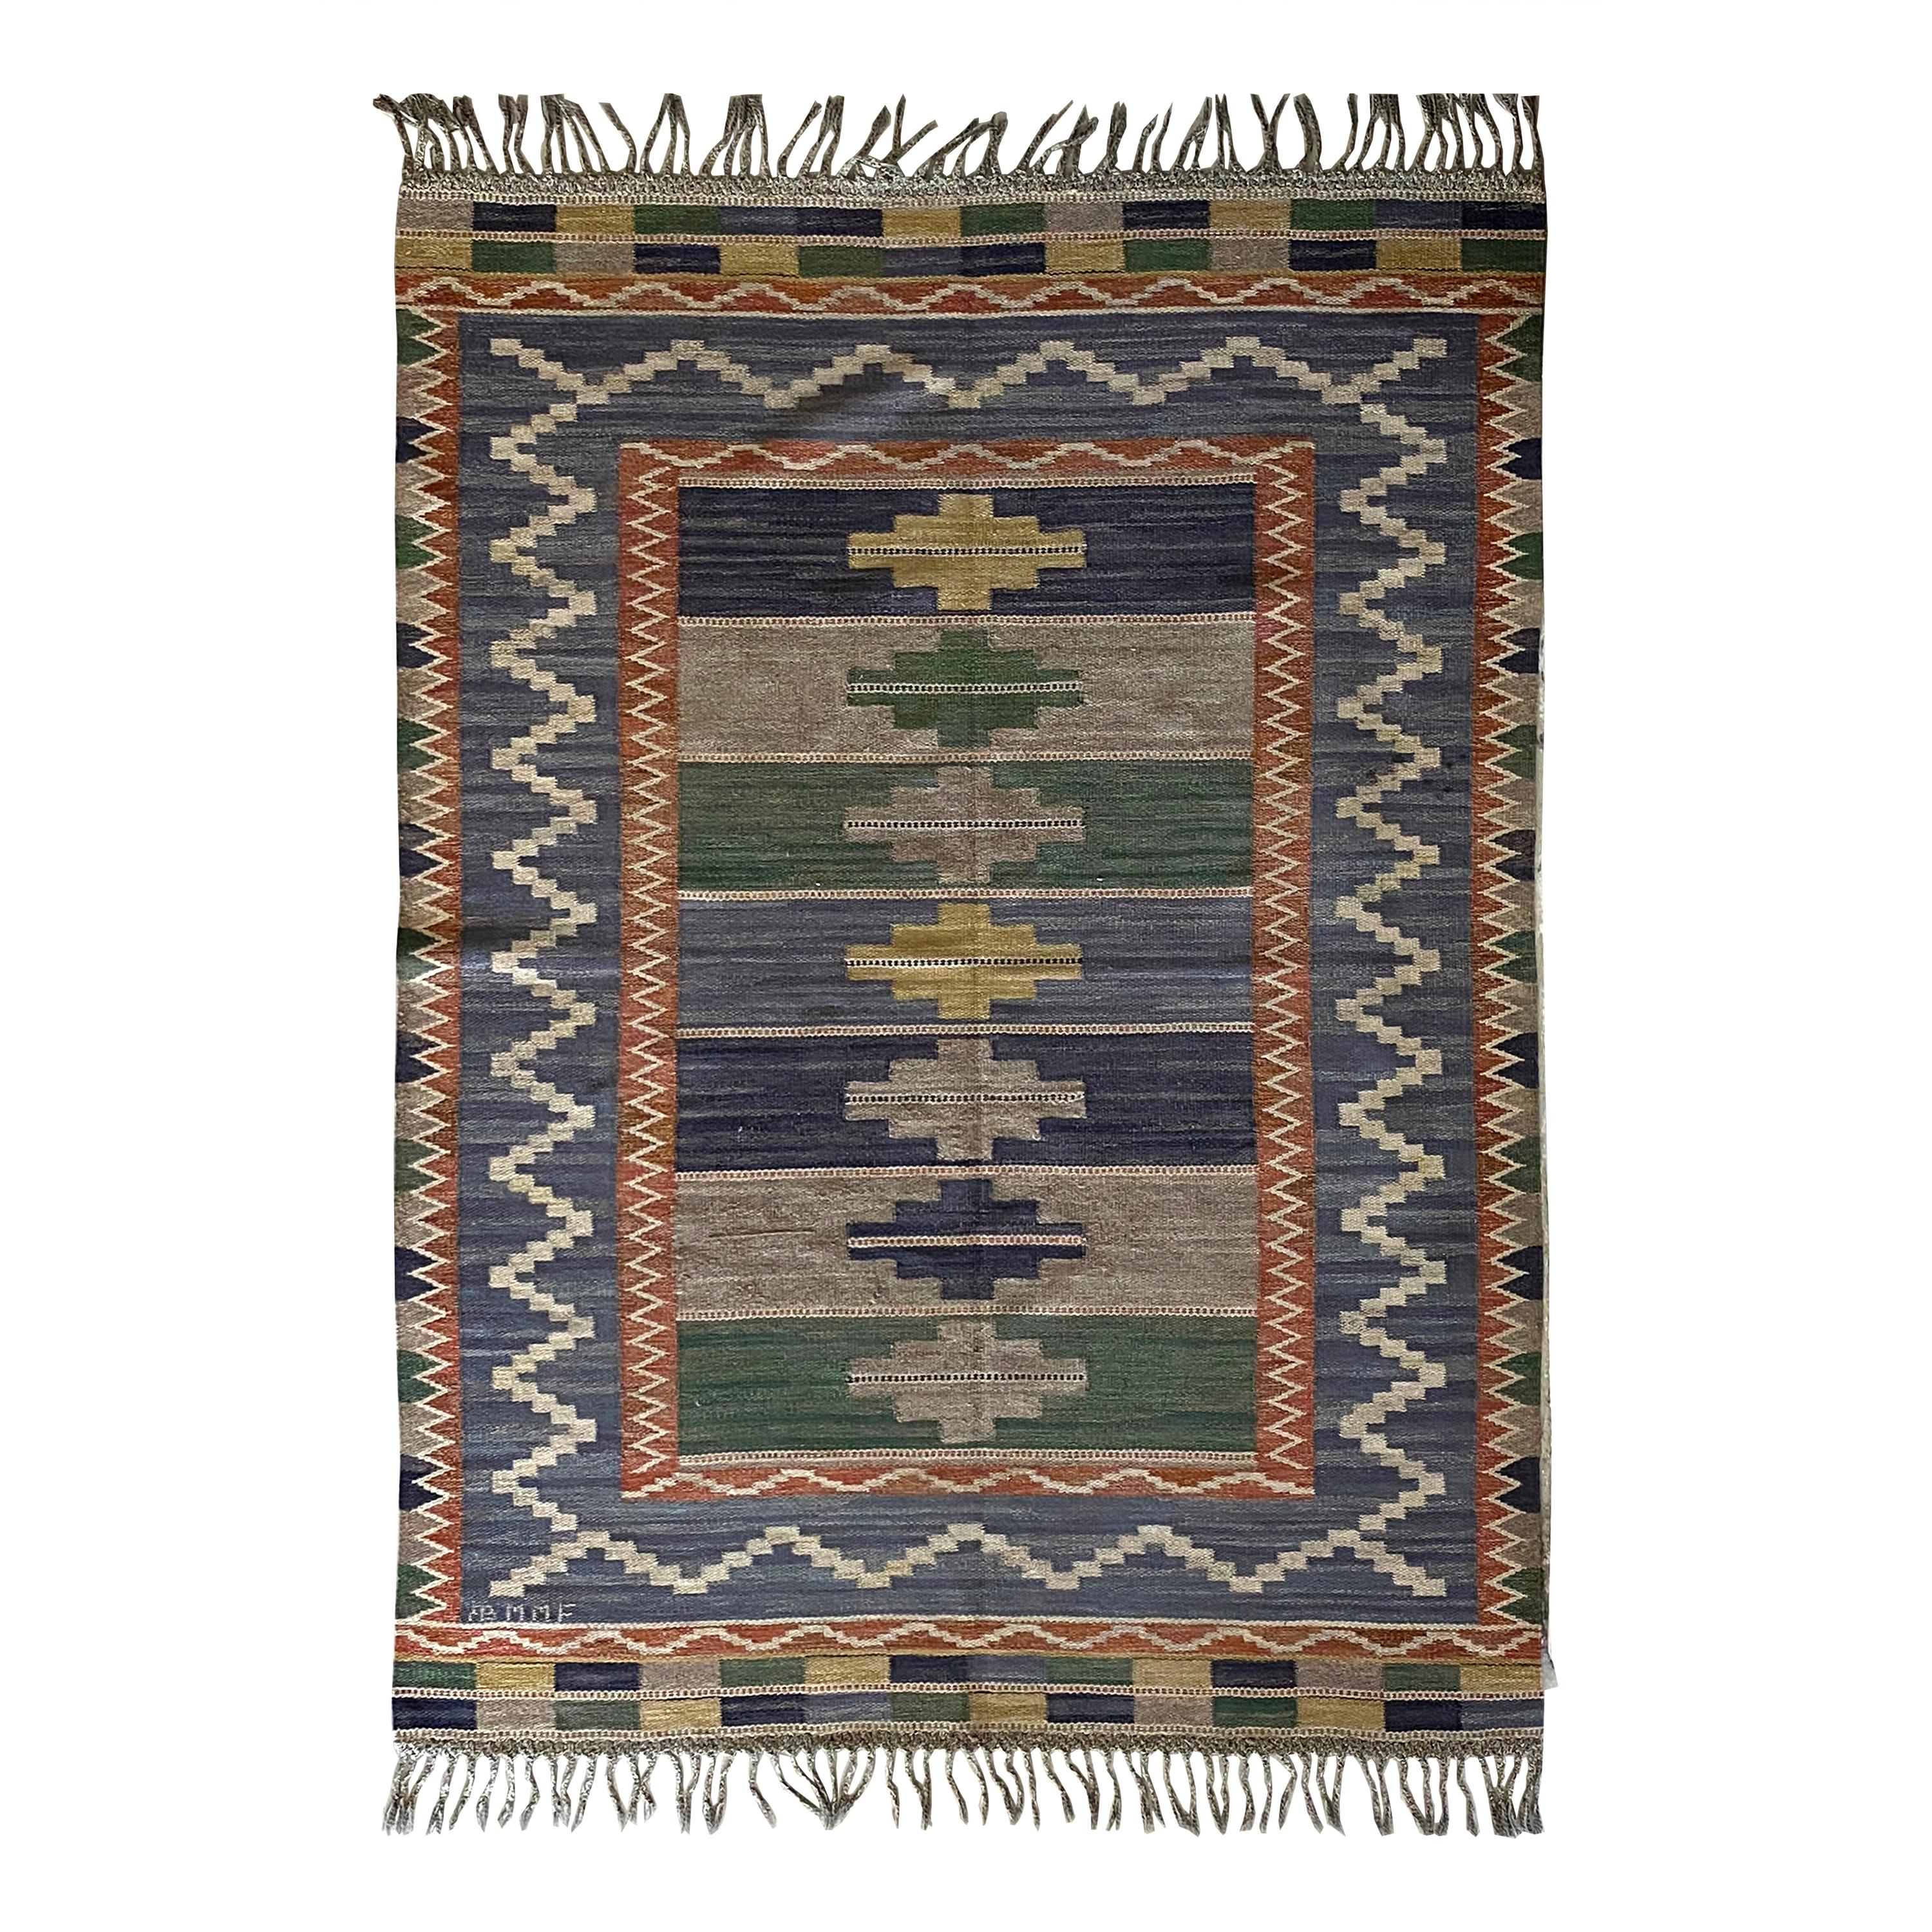 Märta Måås-fjetterström "Blå Taggen" Flat-Weave Carpet, Dyed Wool, Sweden, 1950s